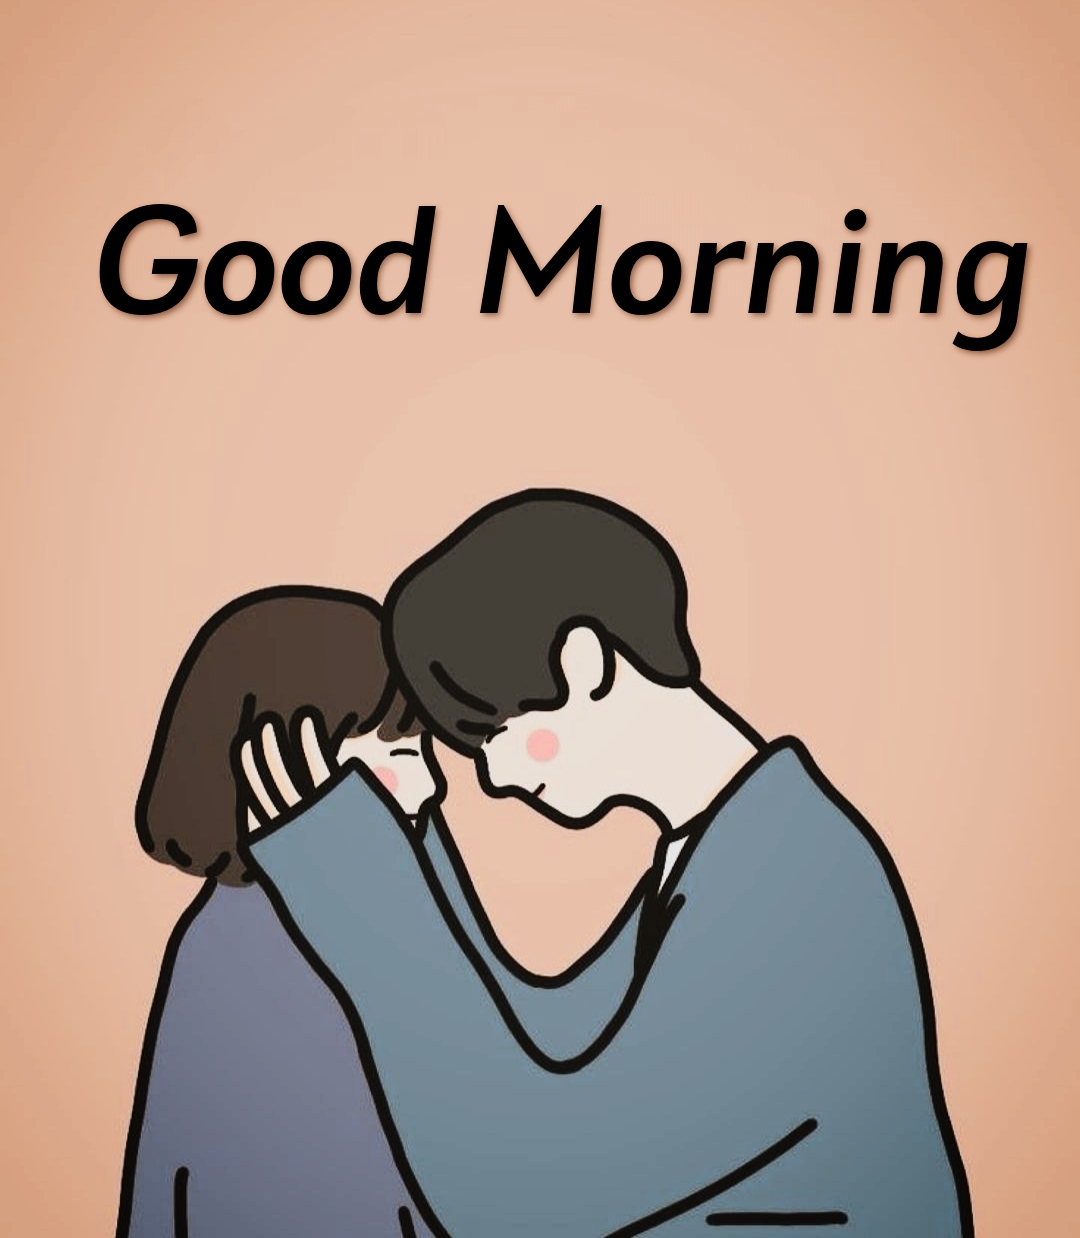 Good Morning Love Images For Boyfriend